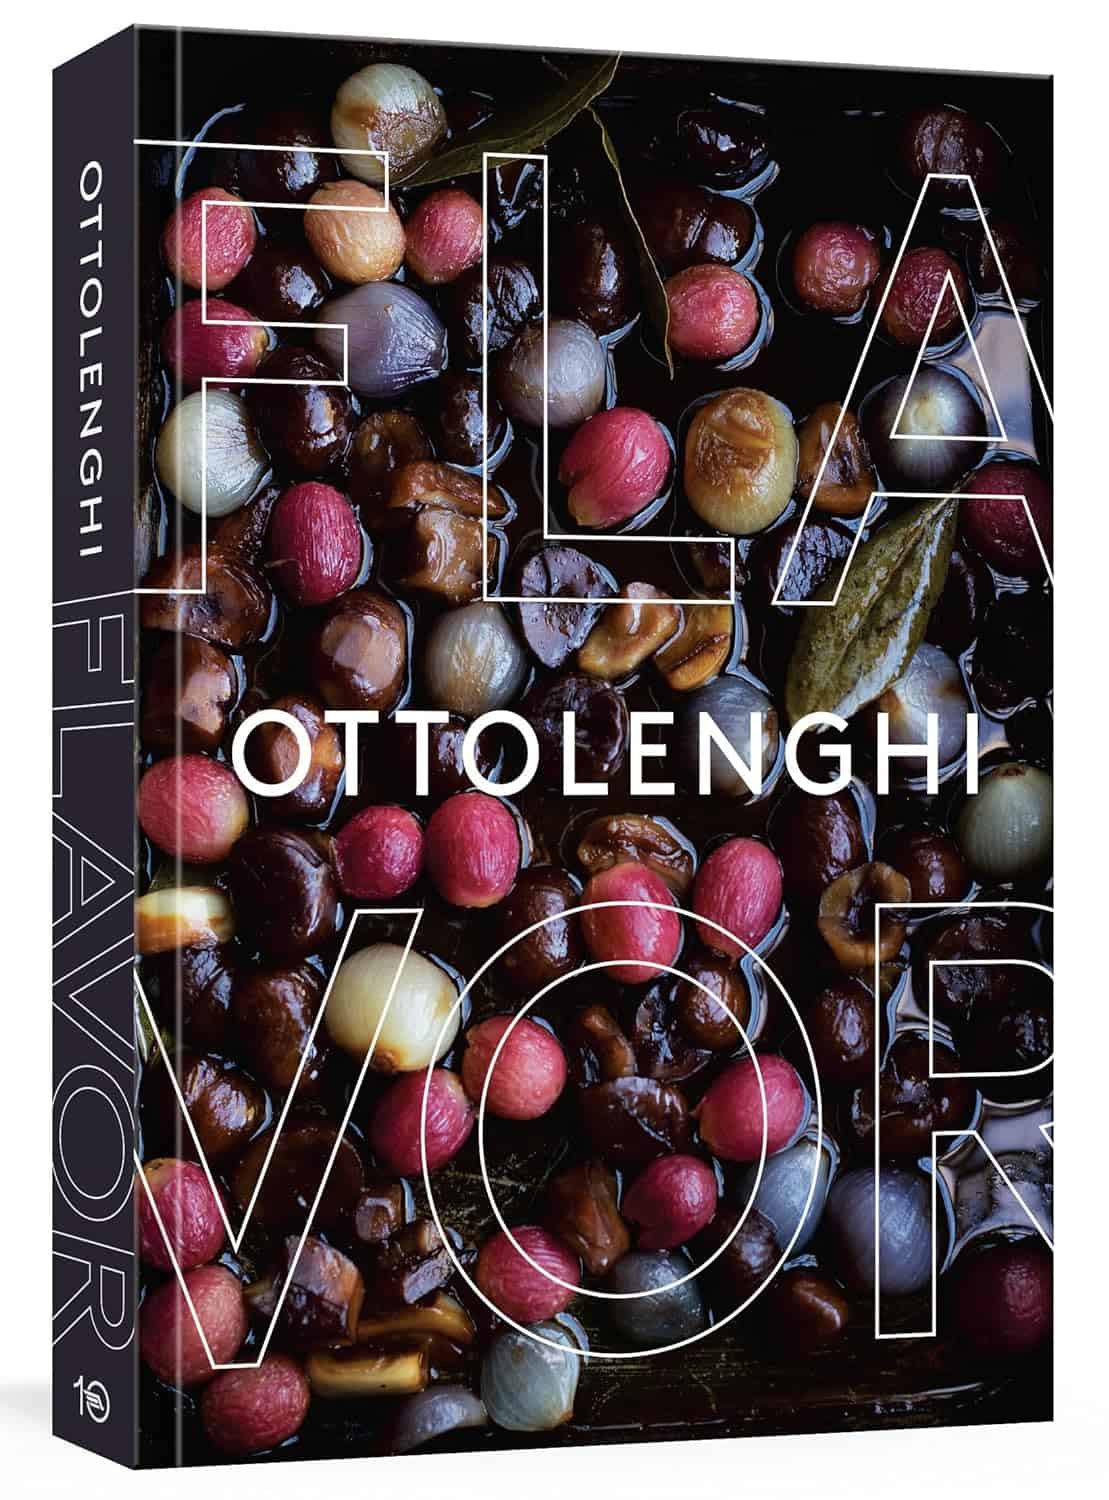 Ottolenghi Flavor by Yotam Ottolenghi and Ixta Belfrage